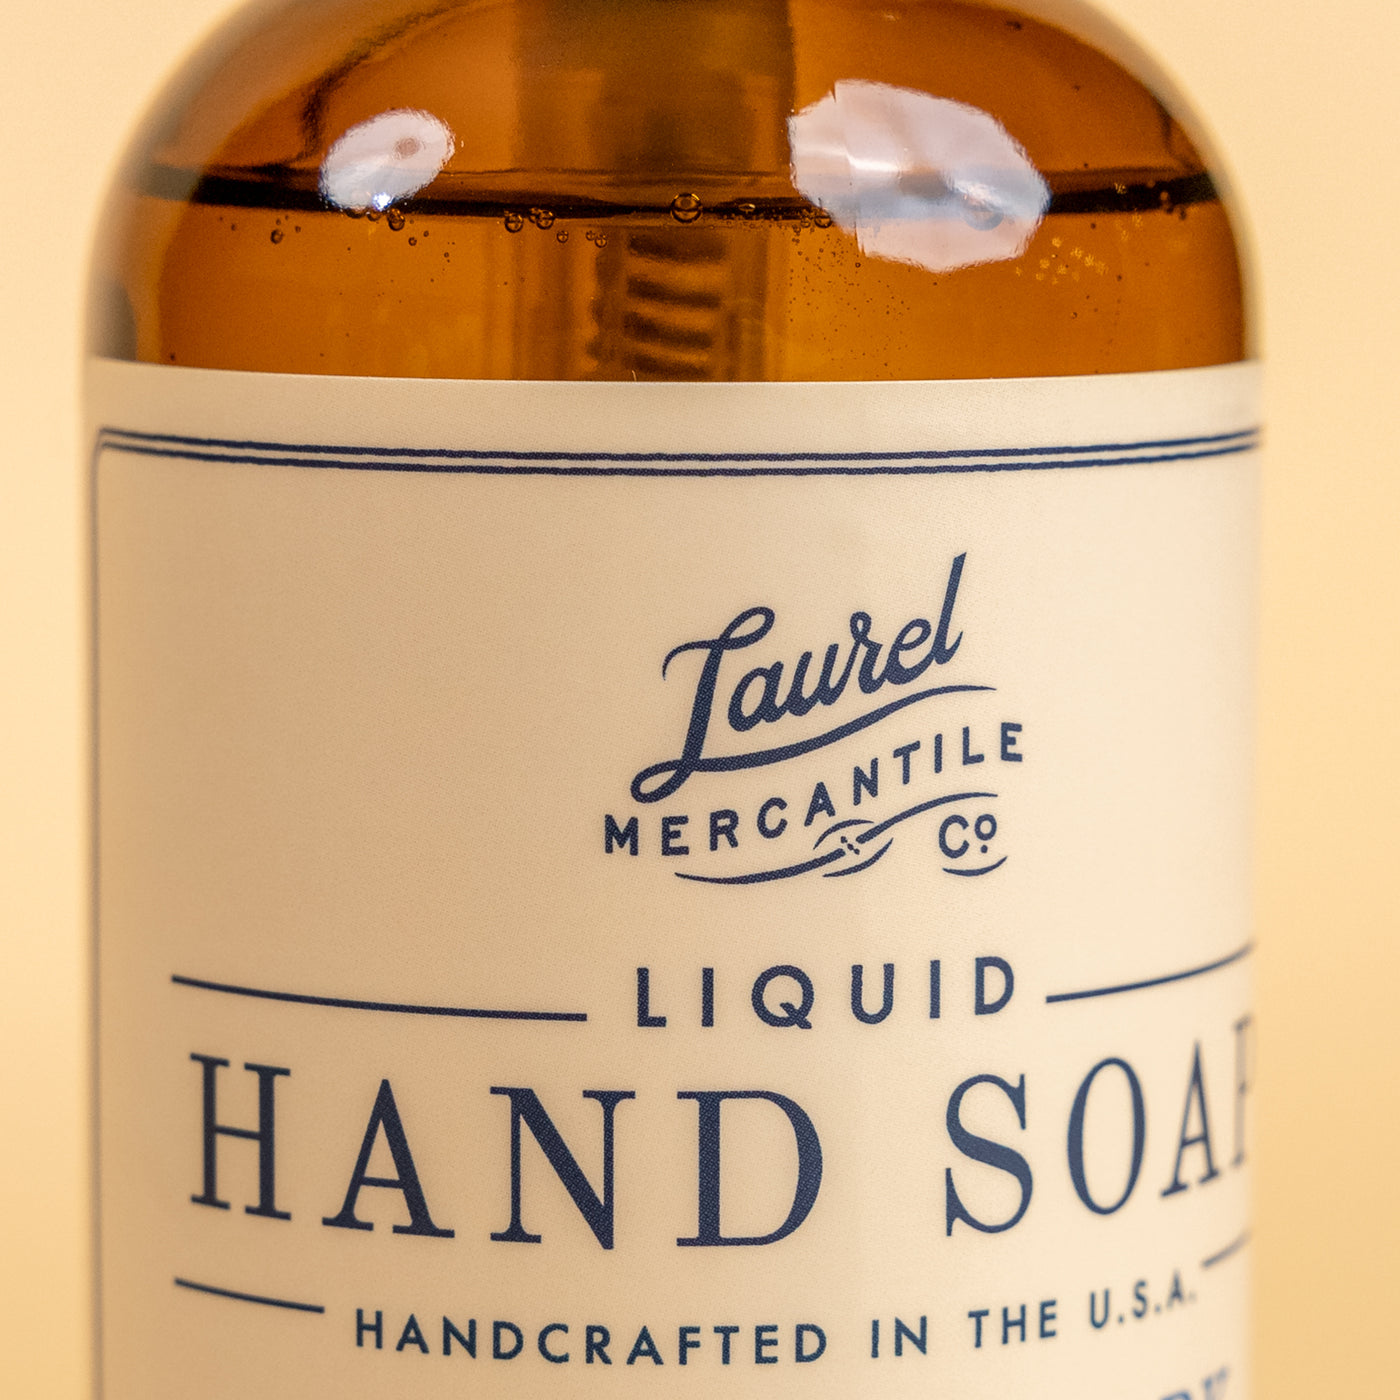 Gardiner Park Hand Soap